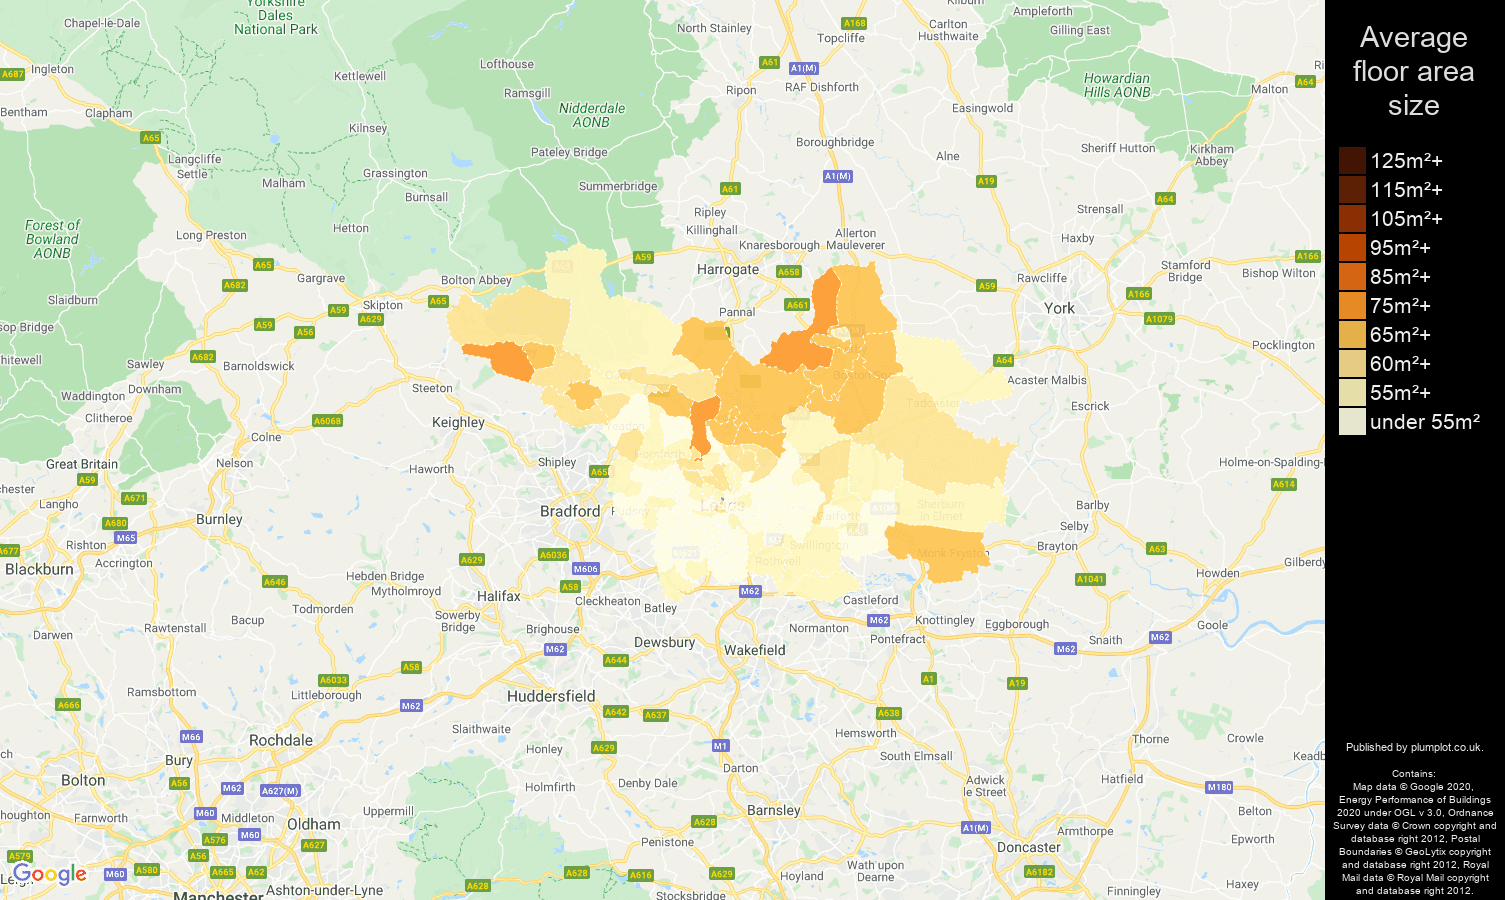 Leeds map of average floor area size of flats